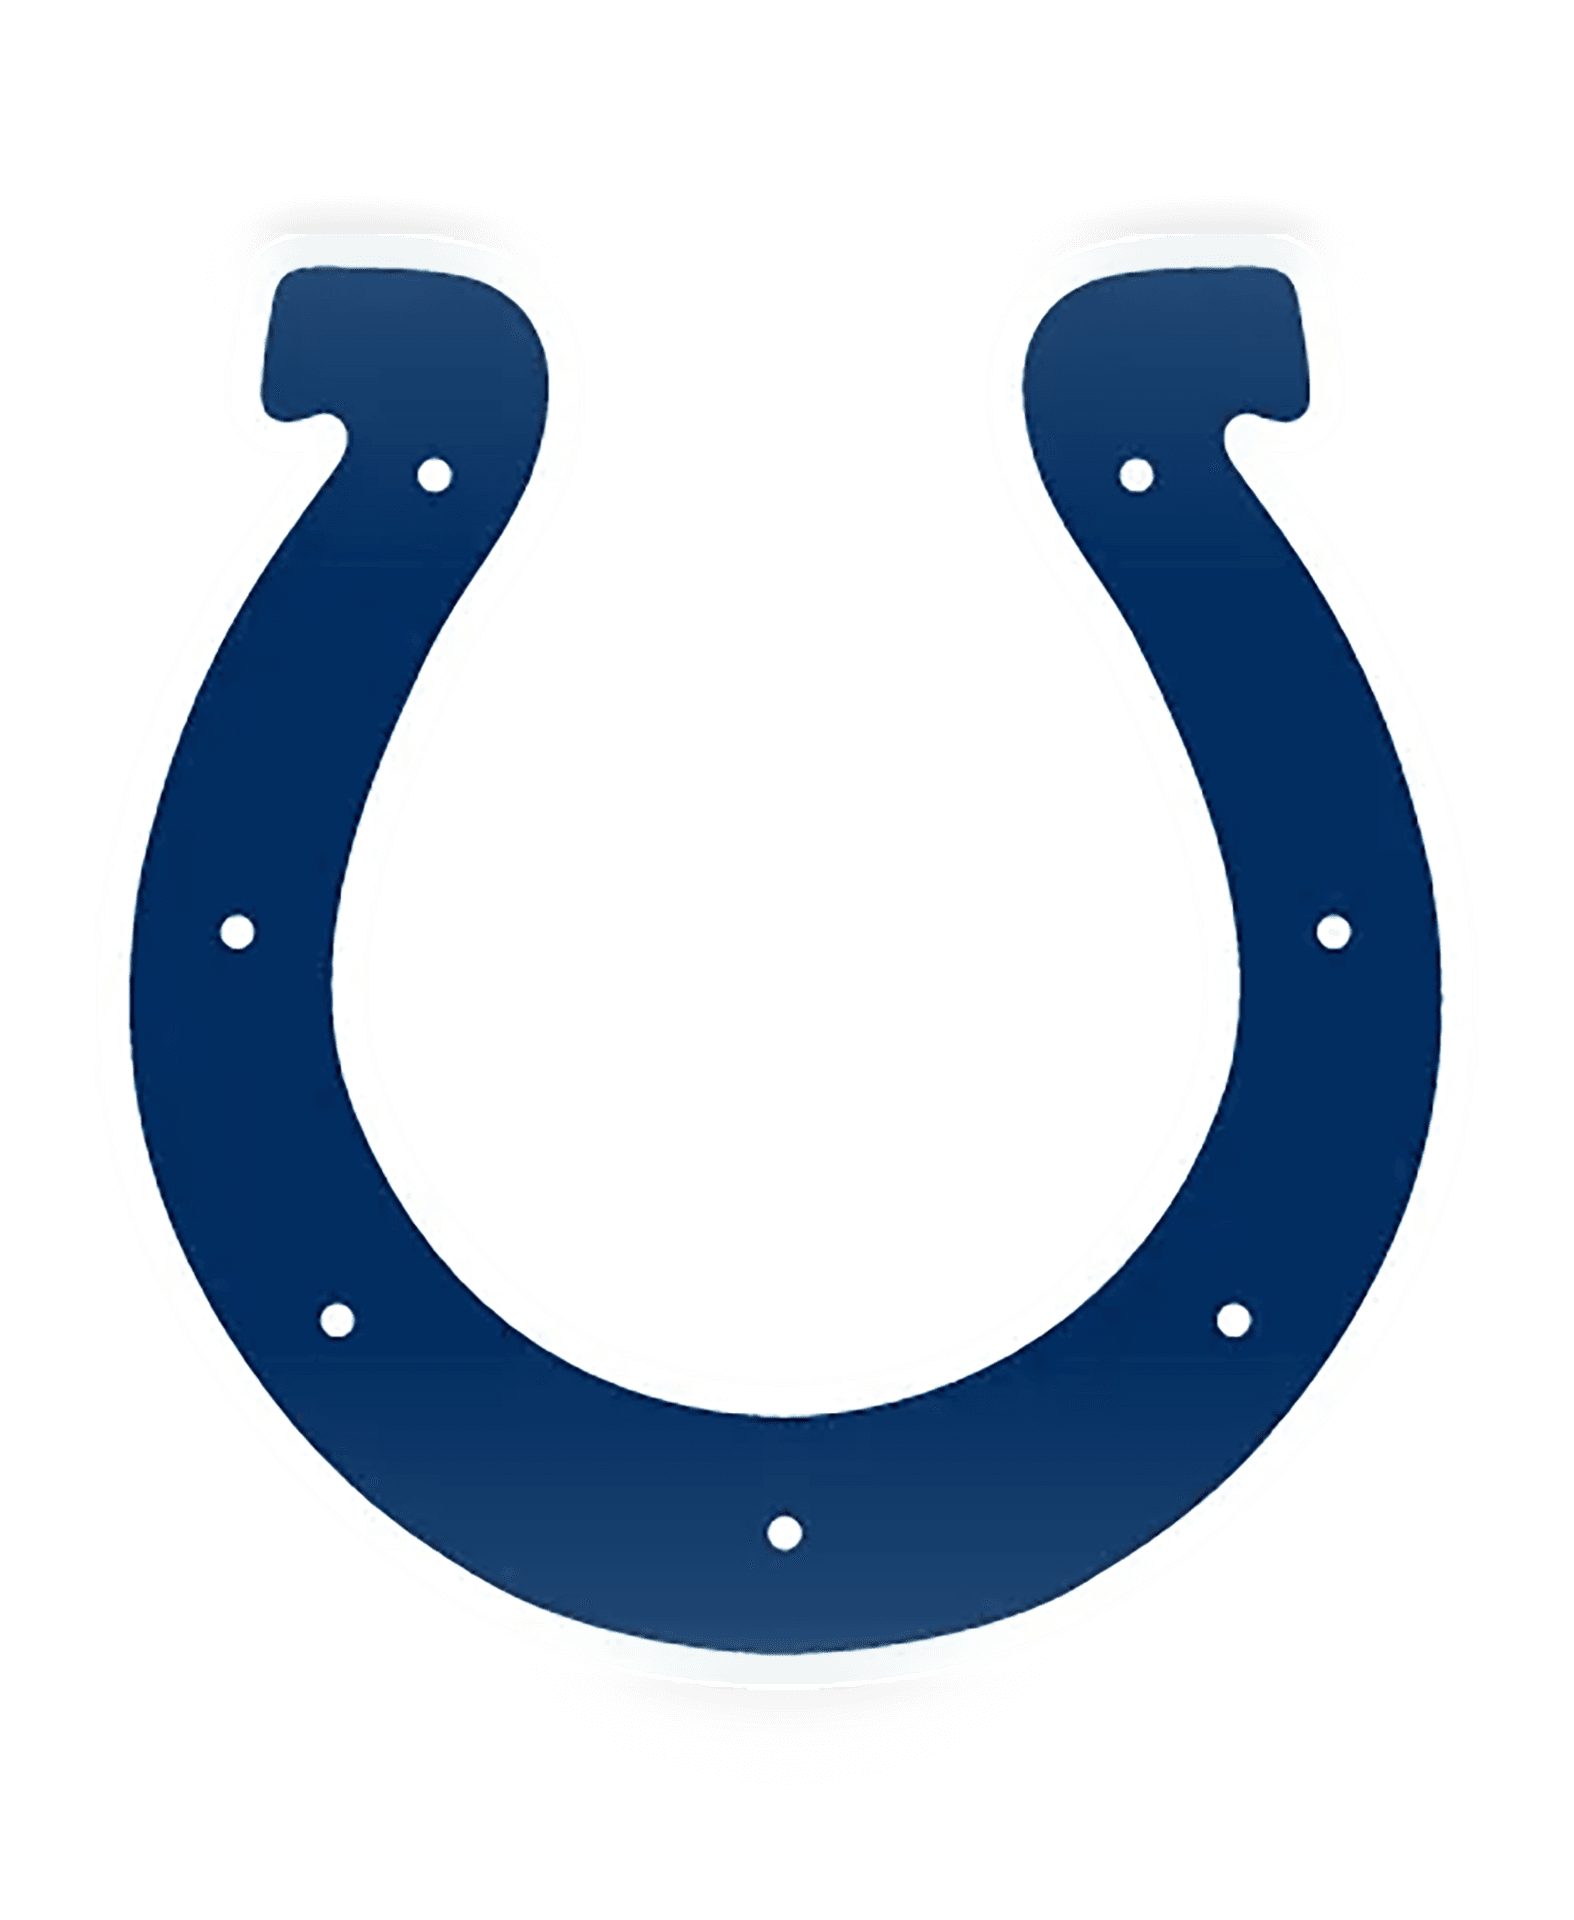 Indianapolis Colts Logo 3d model